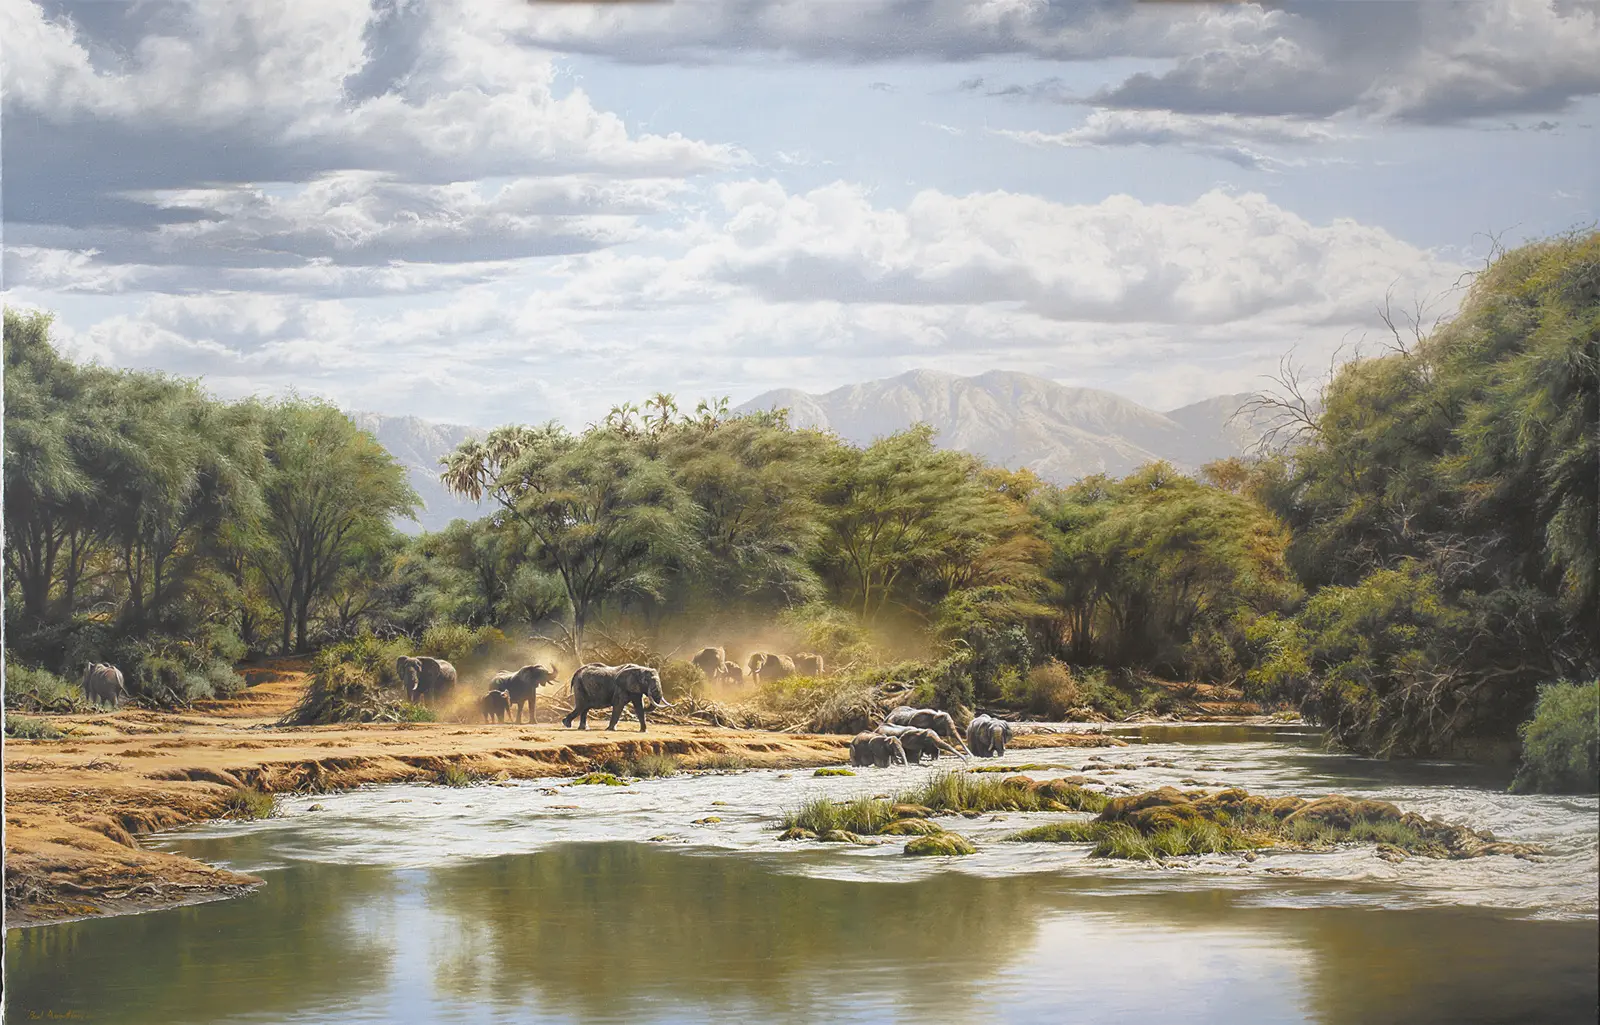 Vising Tsavo National Park on Tour safaris in Kenya - Elephants in Tsavo National Park